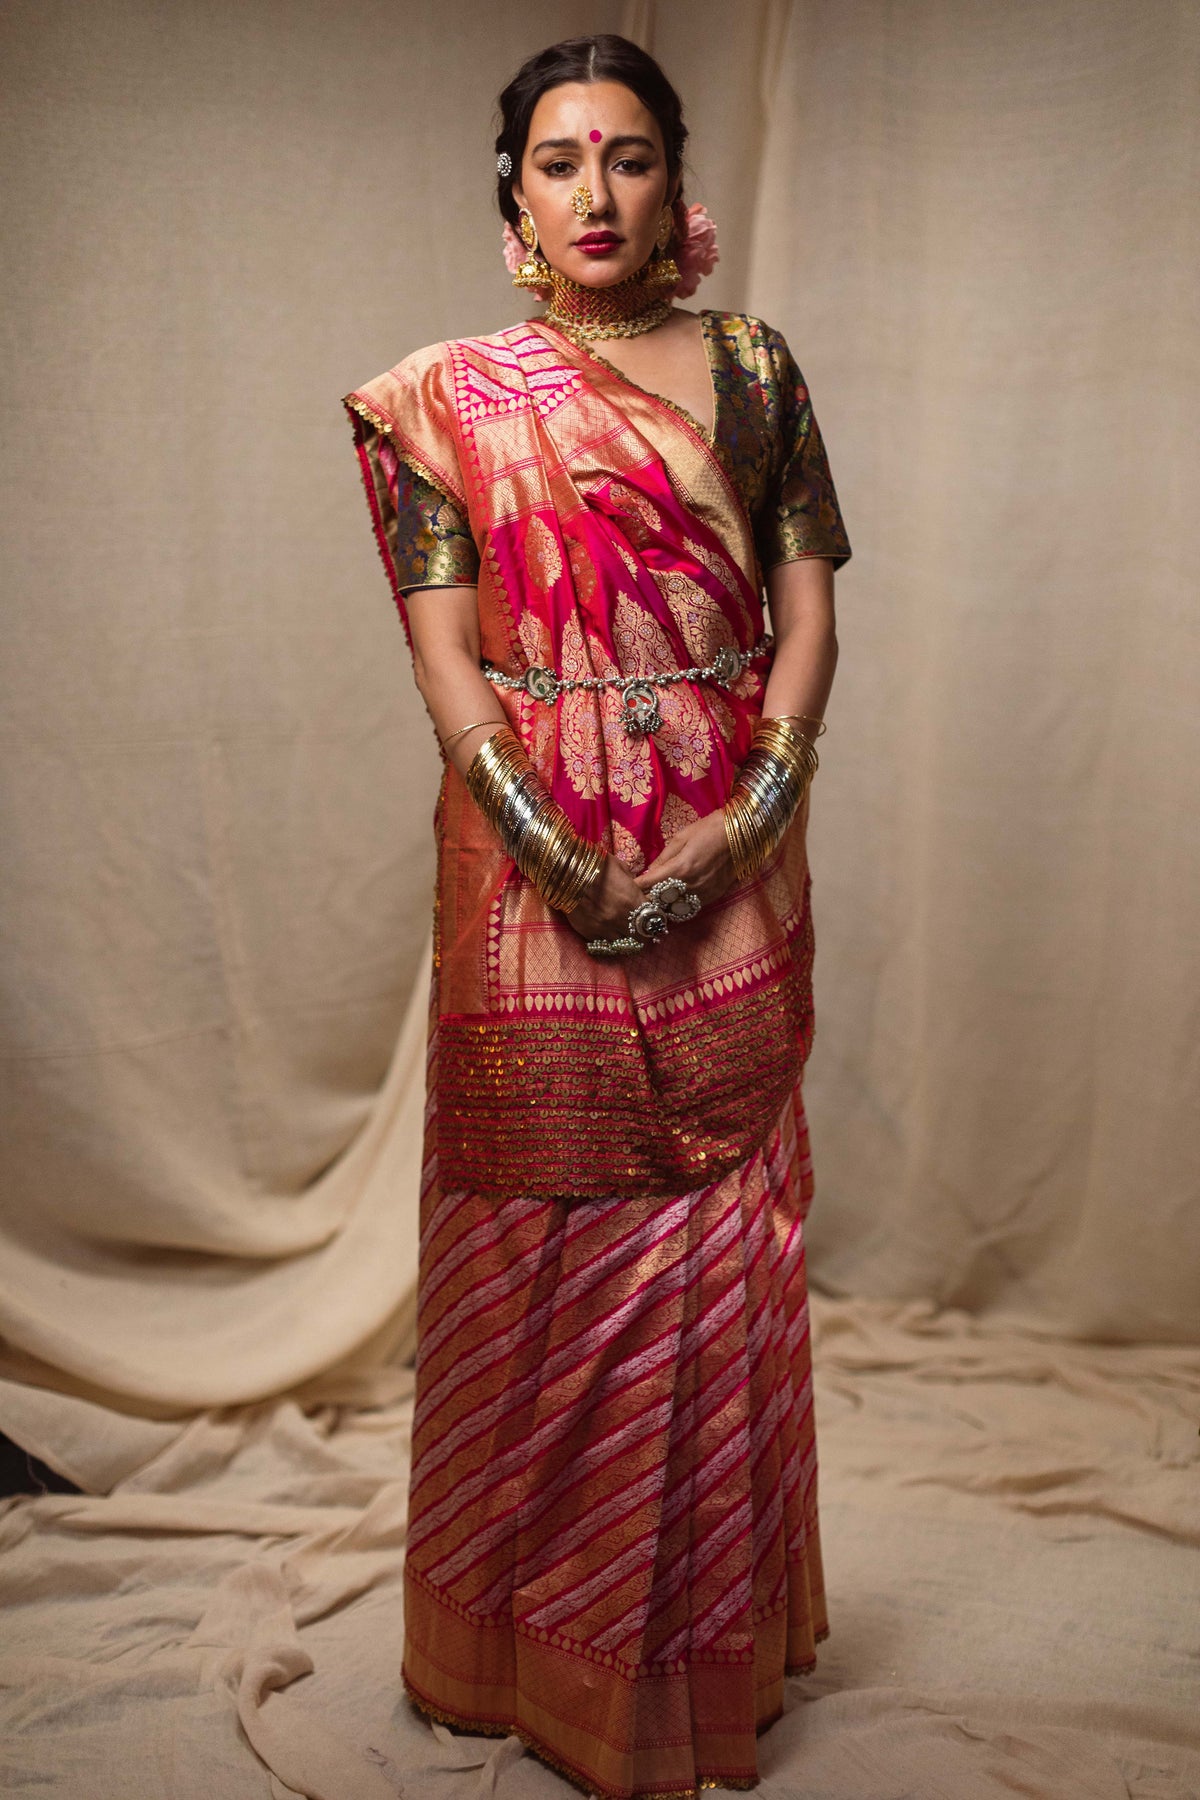 Nisha Davdra - Hennafied: Saree Draping Bengali Style